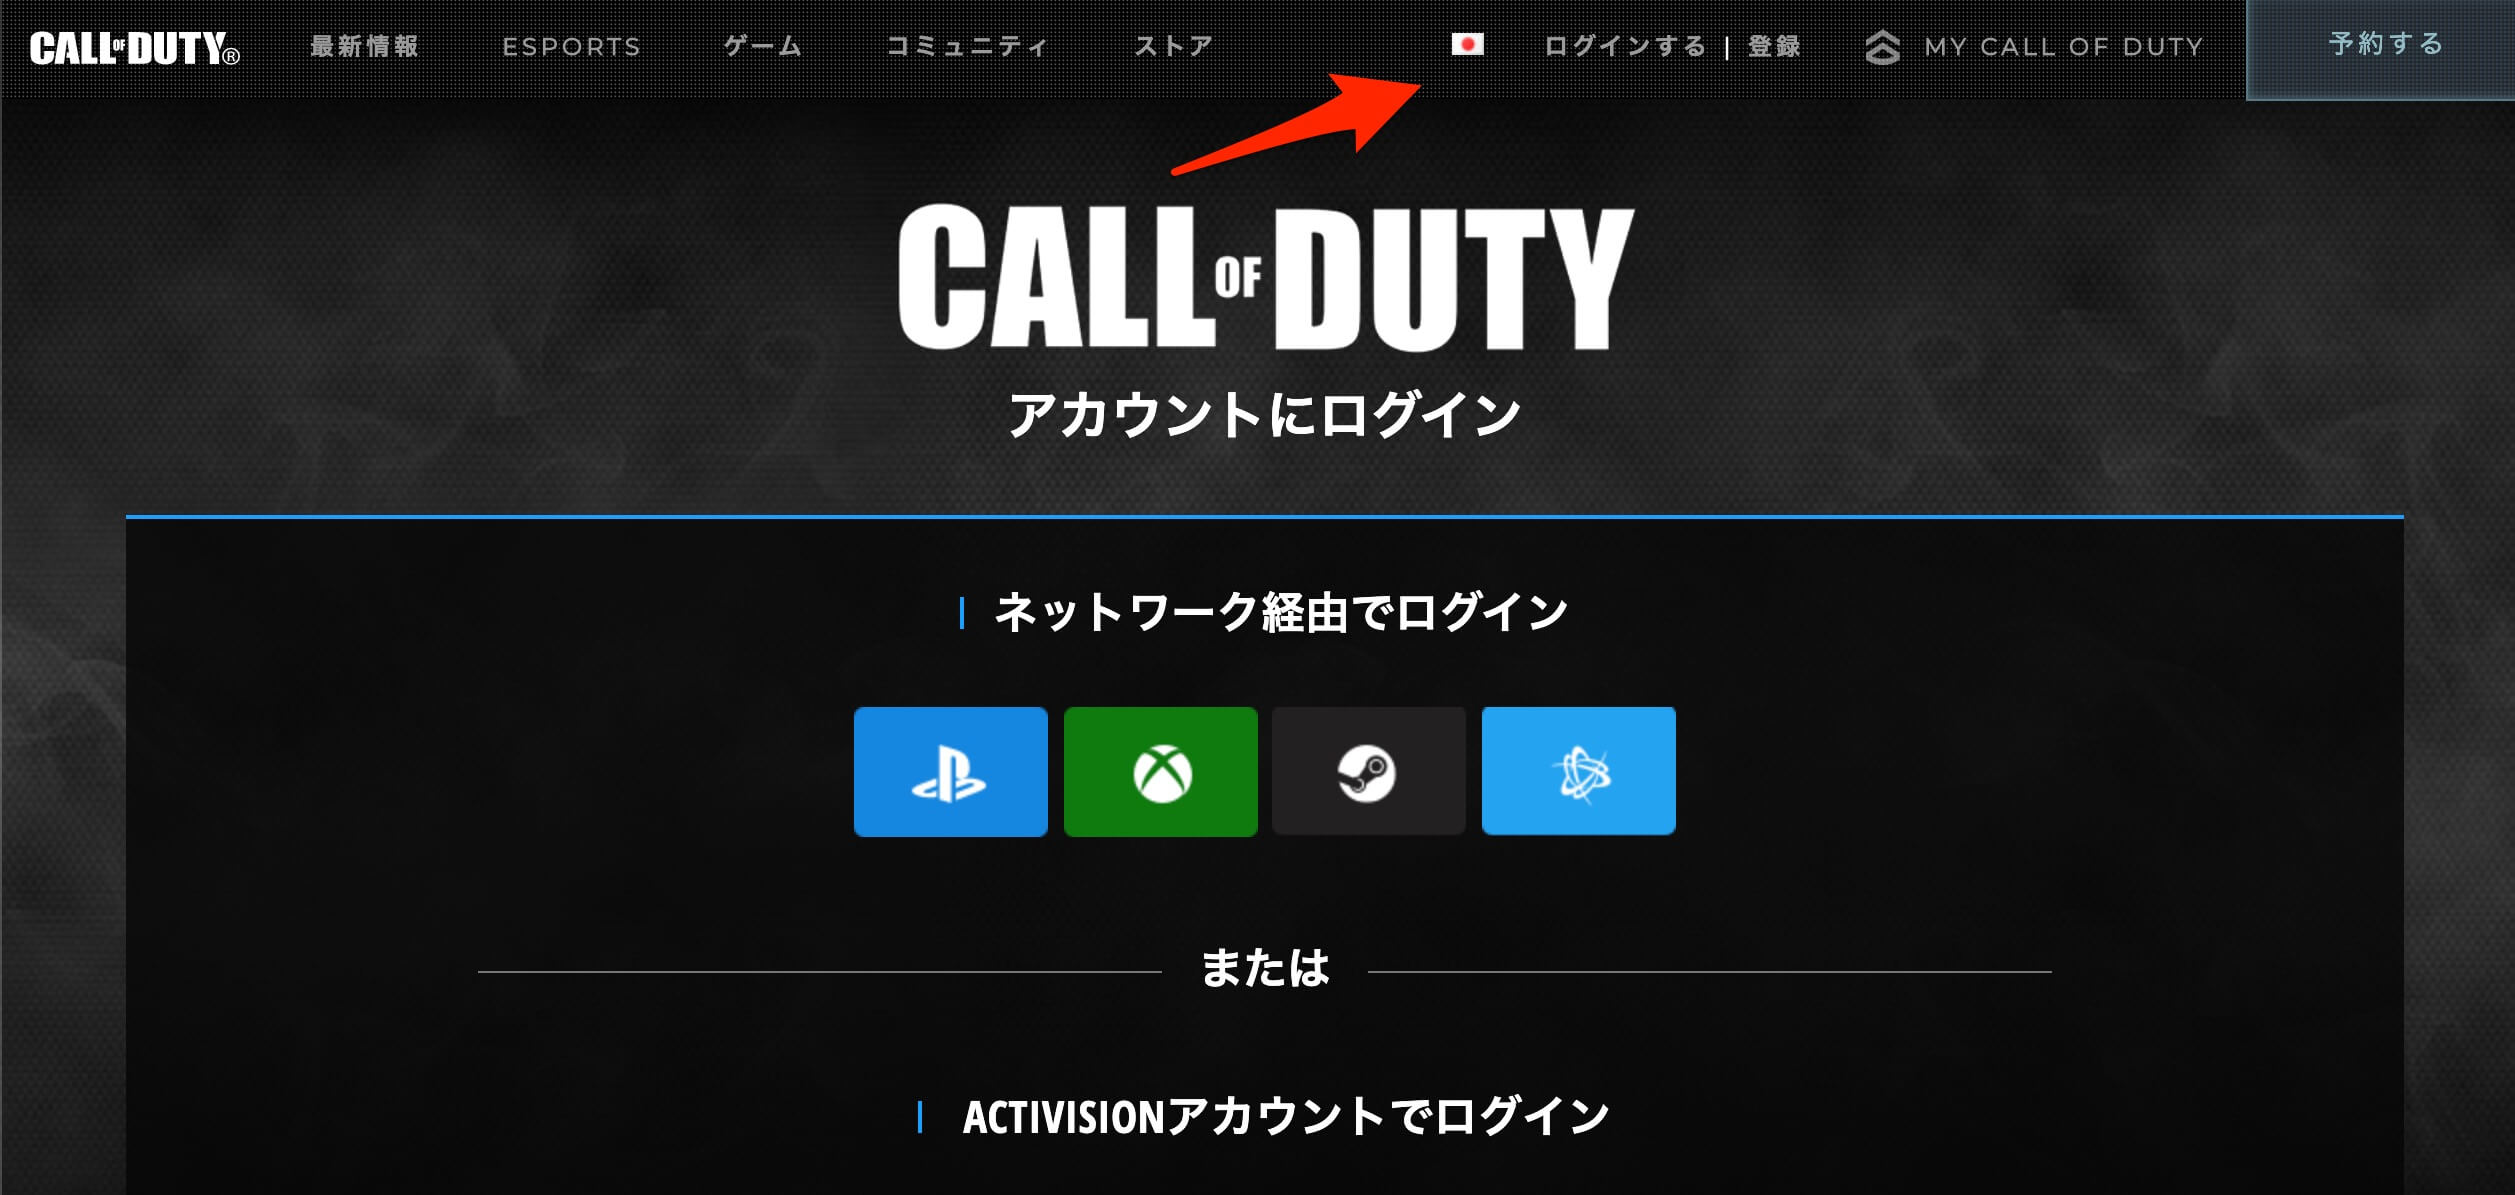 Call of Duty: Modern Warfare - Open Beta